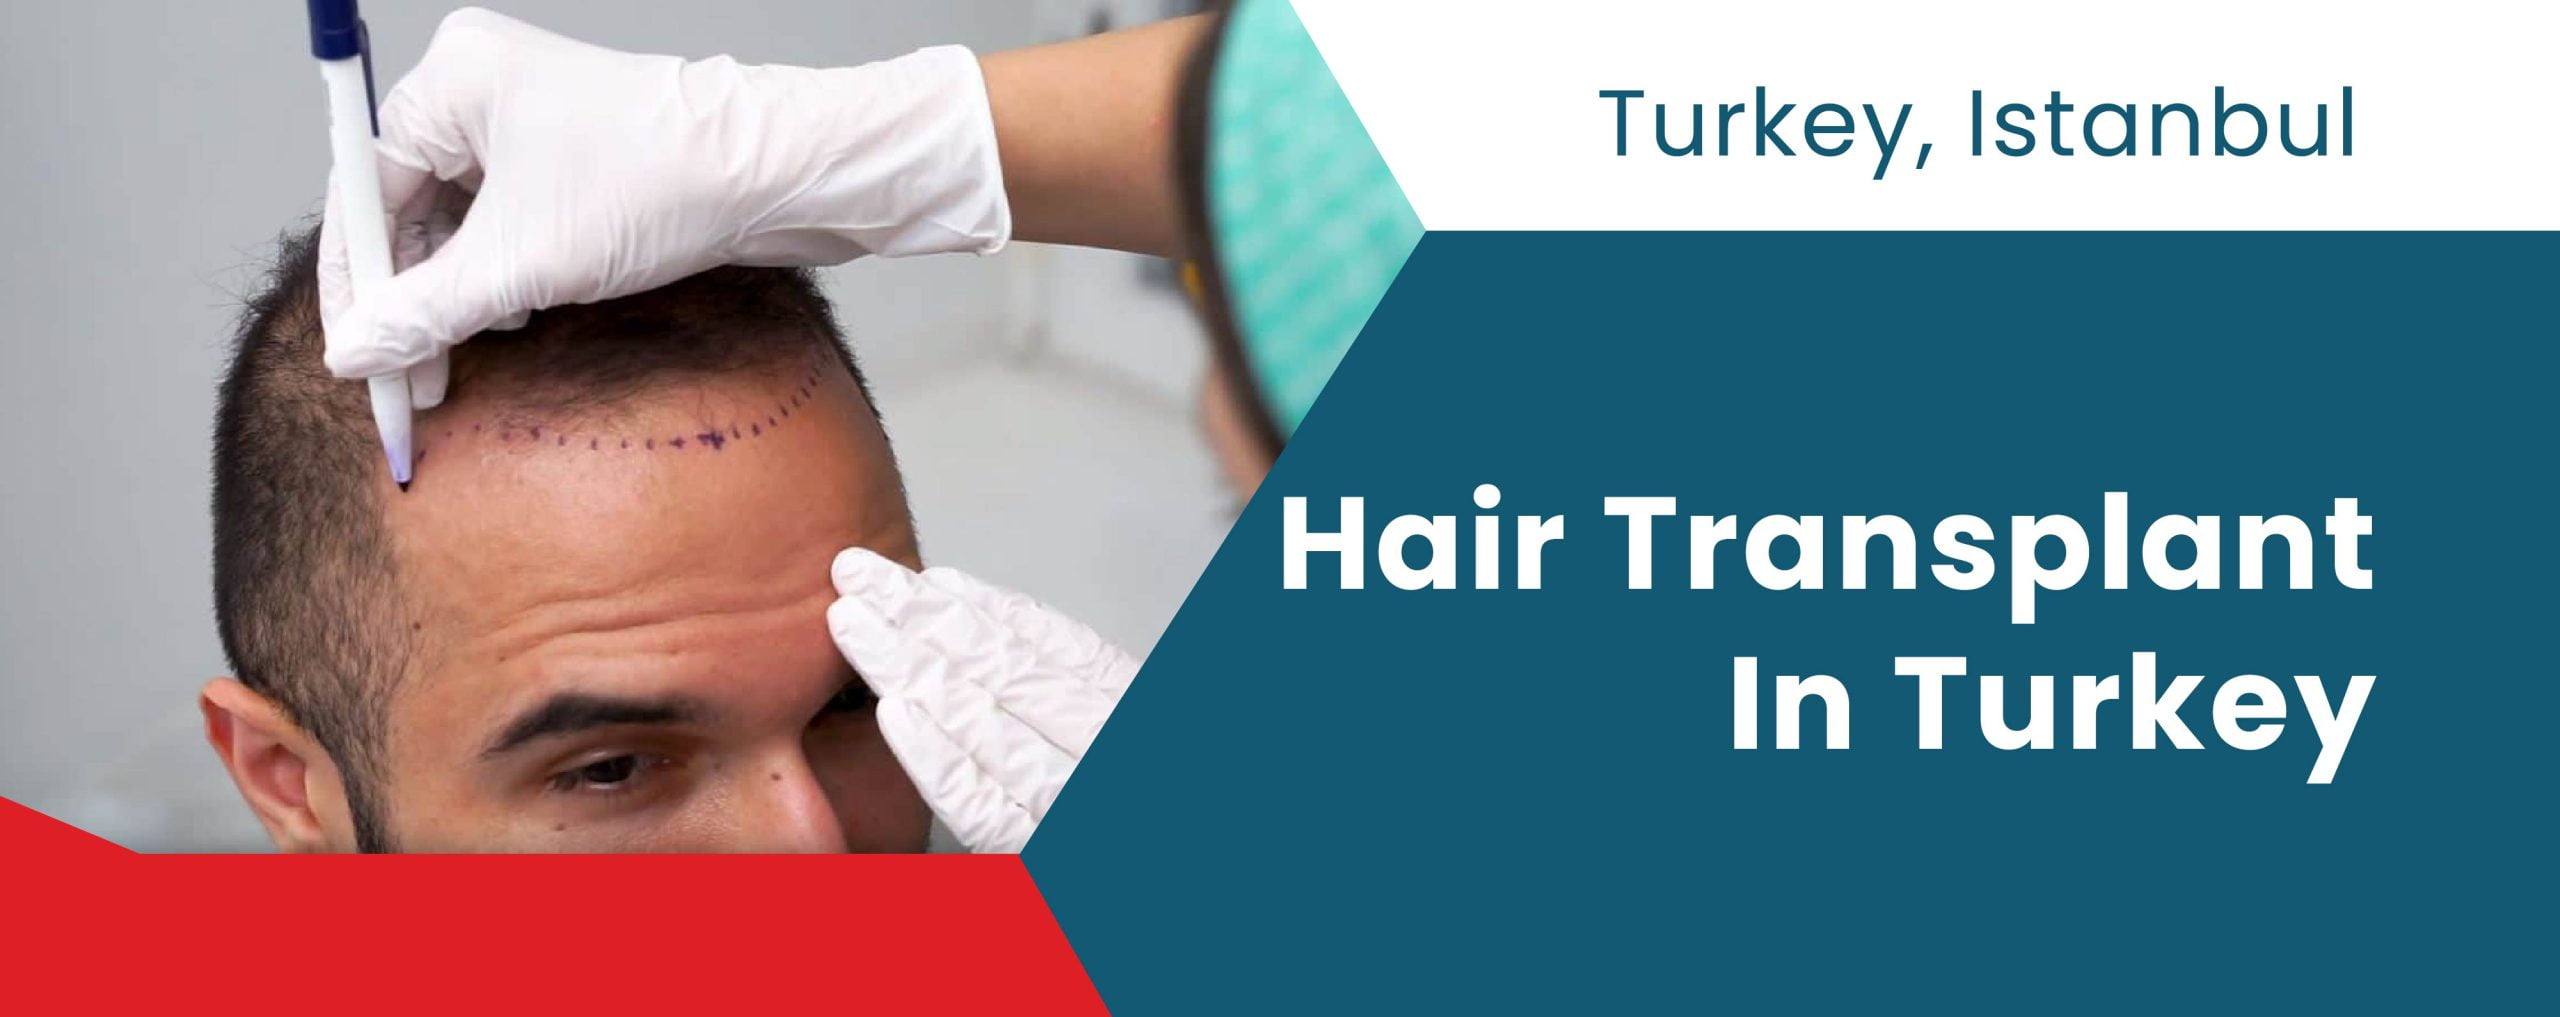 Hair Transplant In Turkey